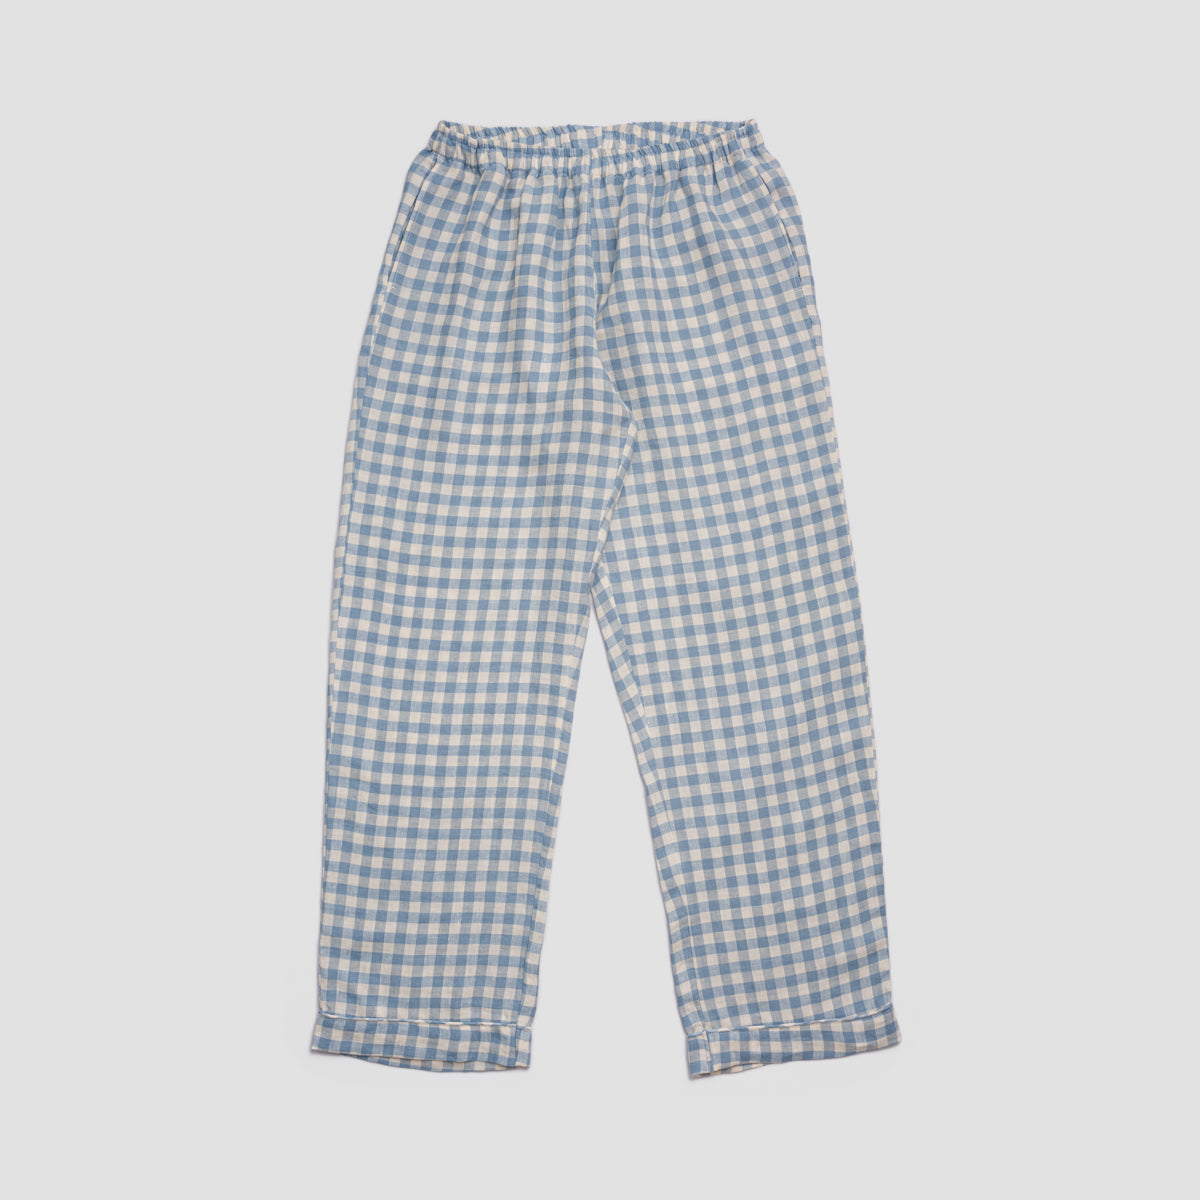 Men's Warm Blue Gingham Linen Pajama Pants Set